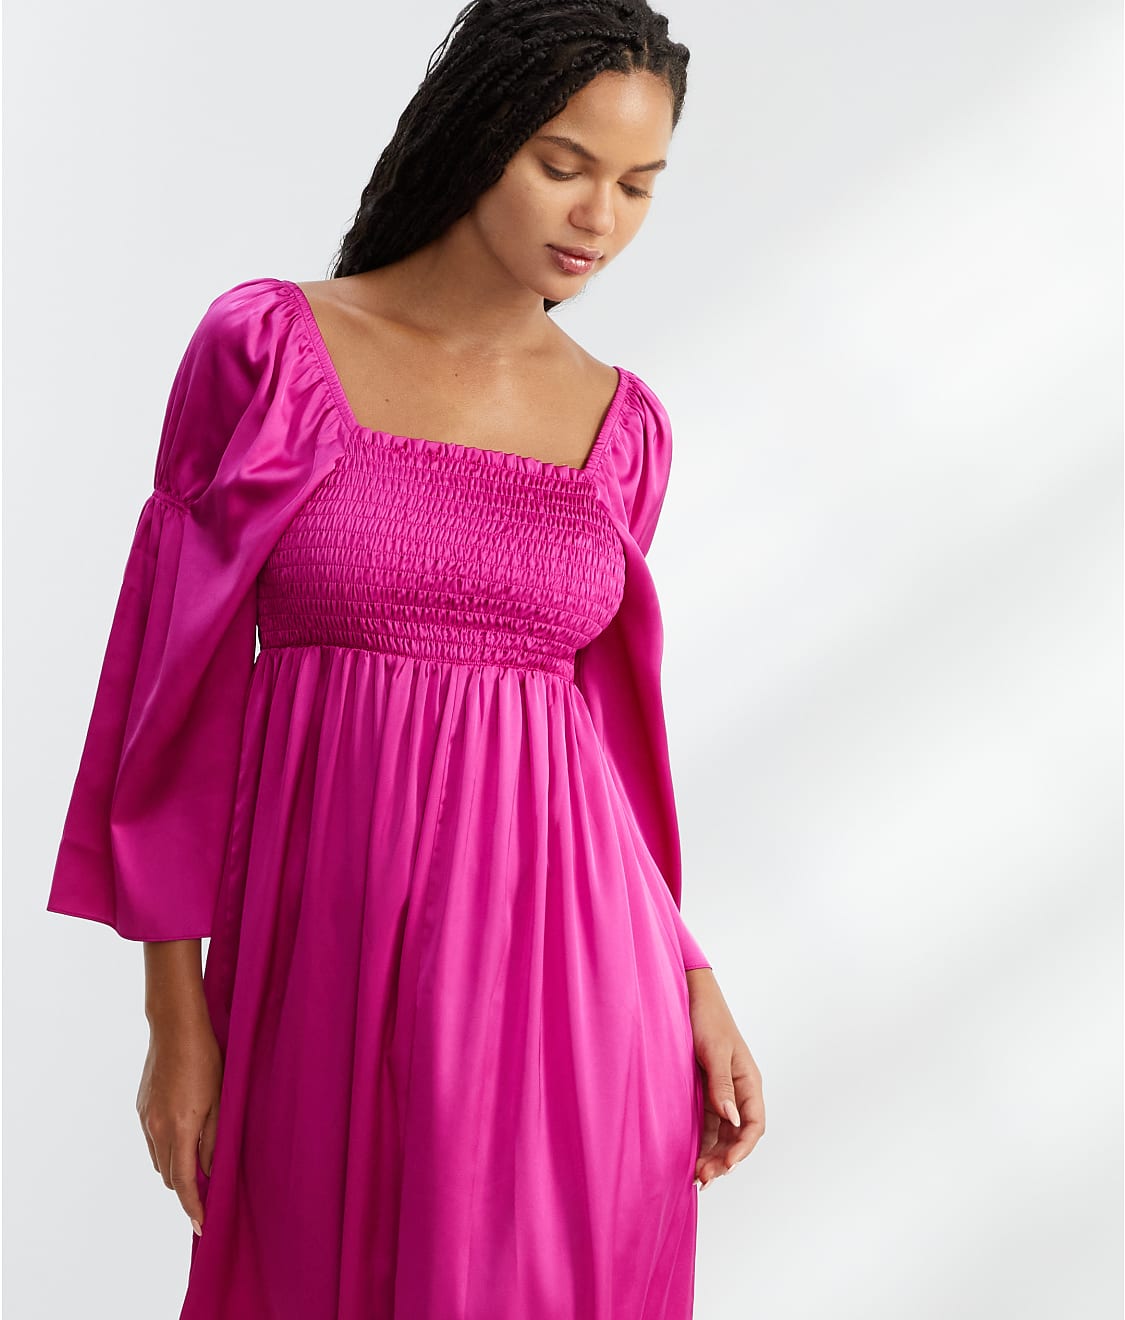 Bare: The Elegant Satin Nightgown BN-2089